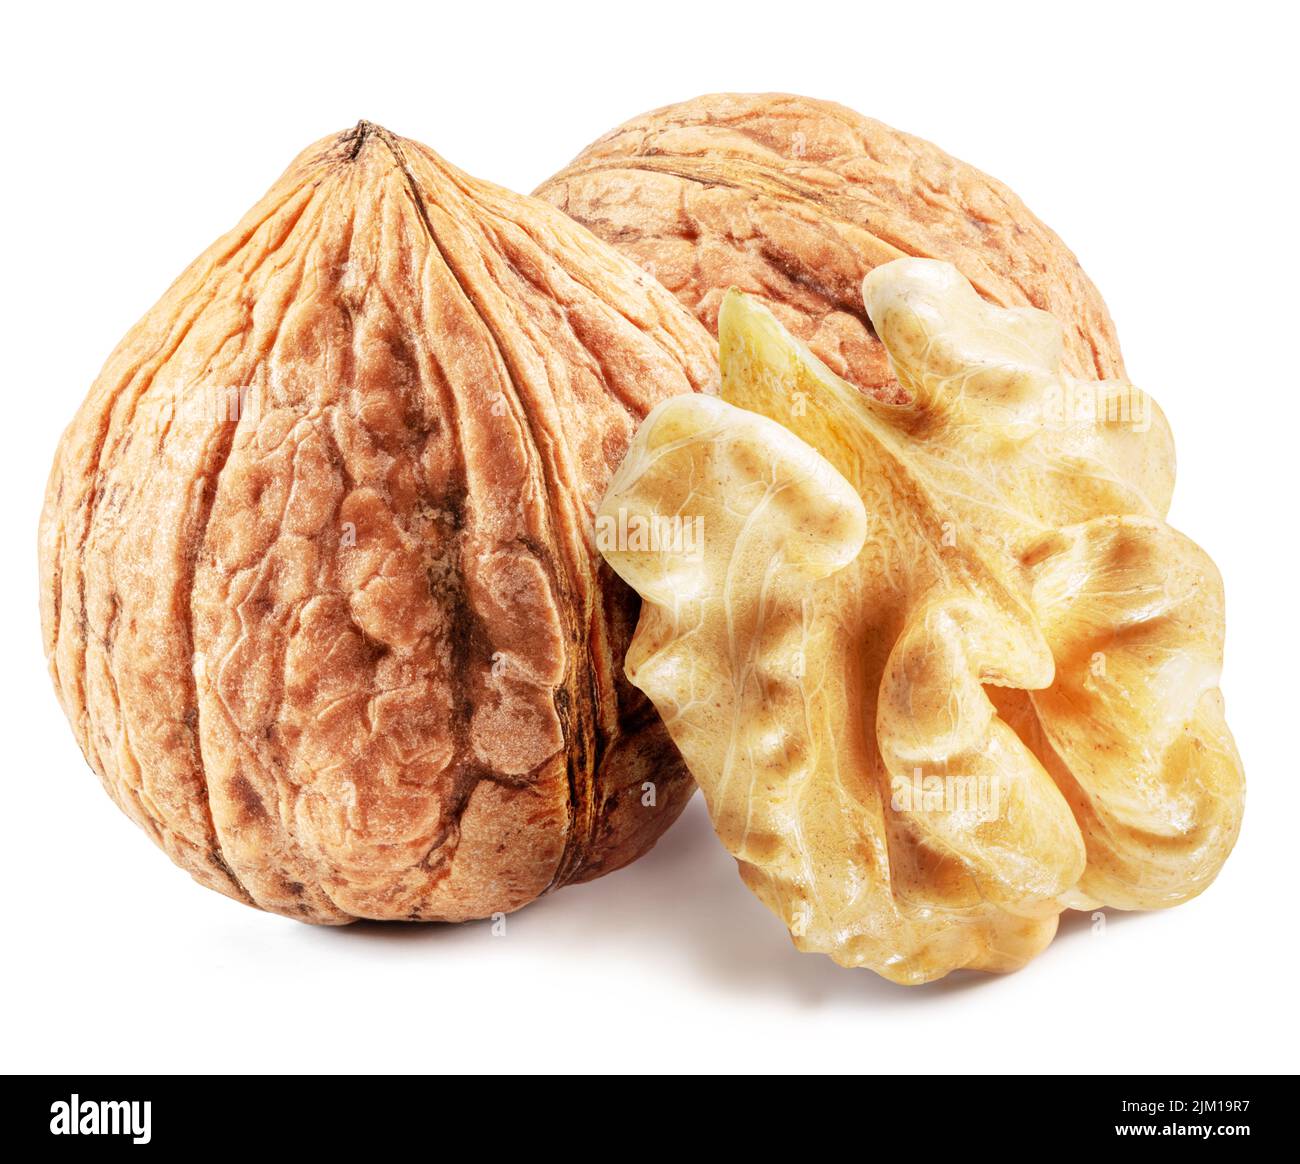 Walnuts and walnut kernel isolated on white background. Stock Photo